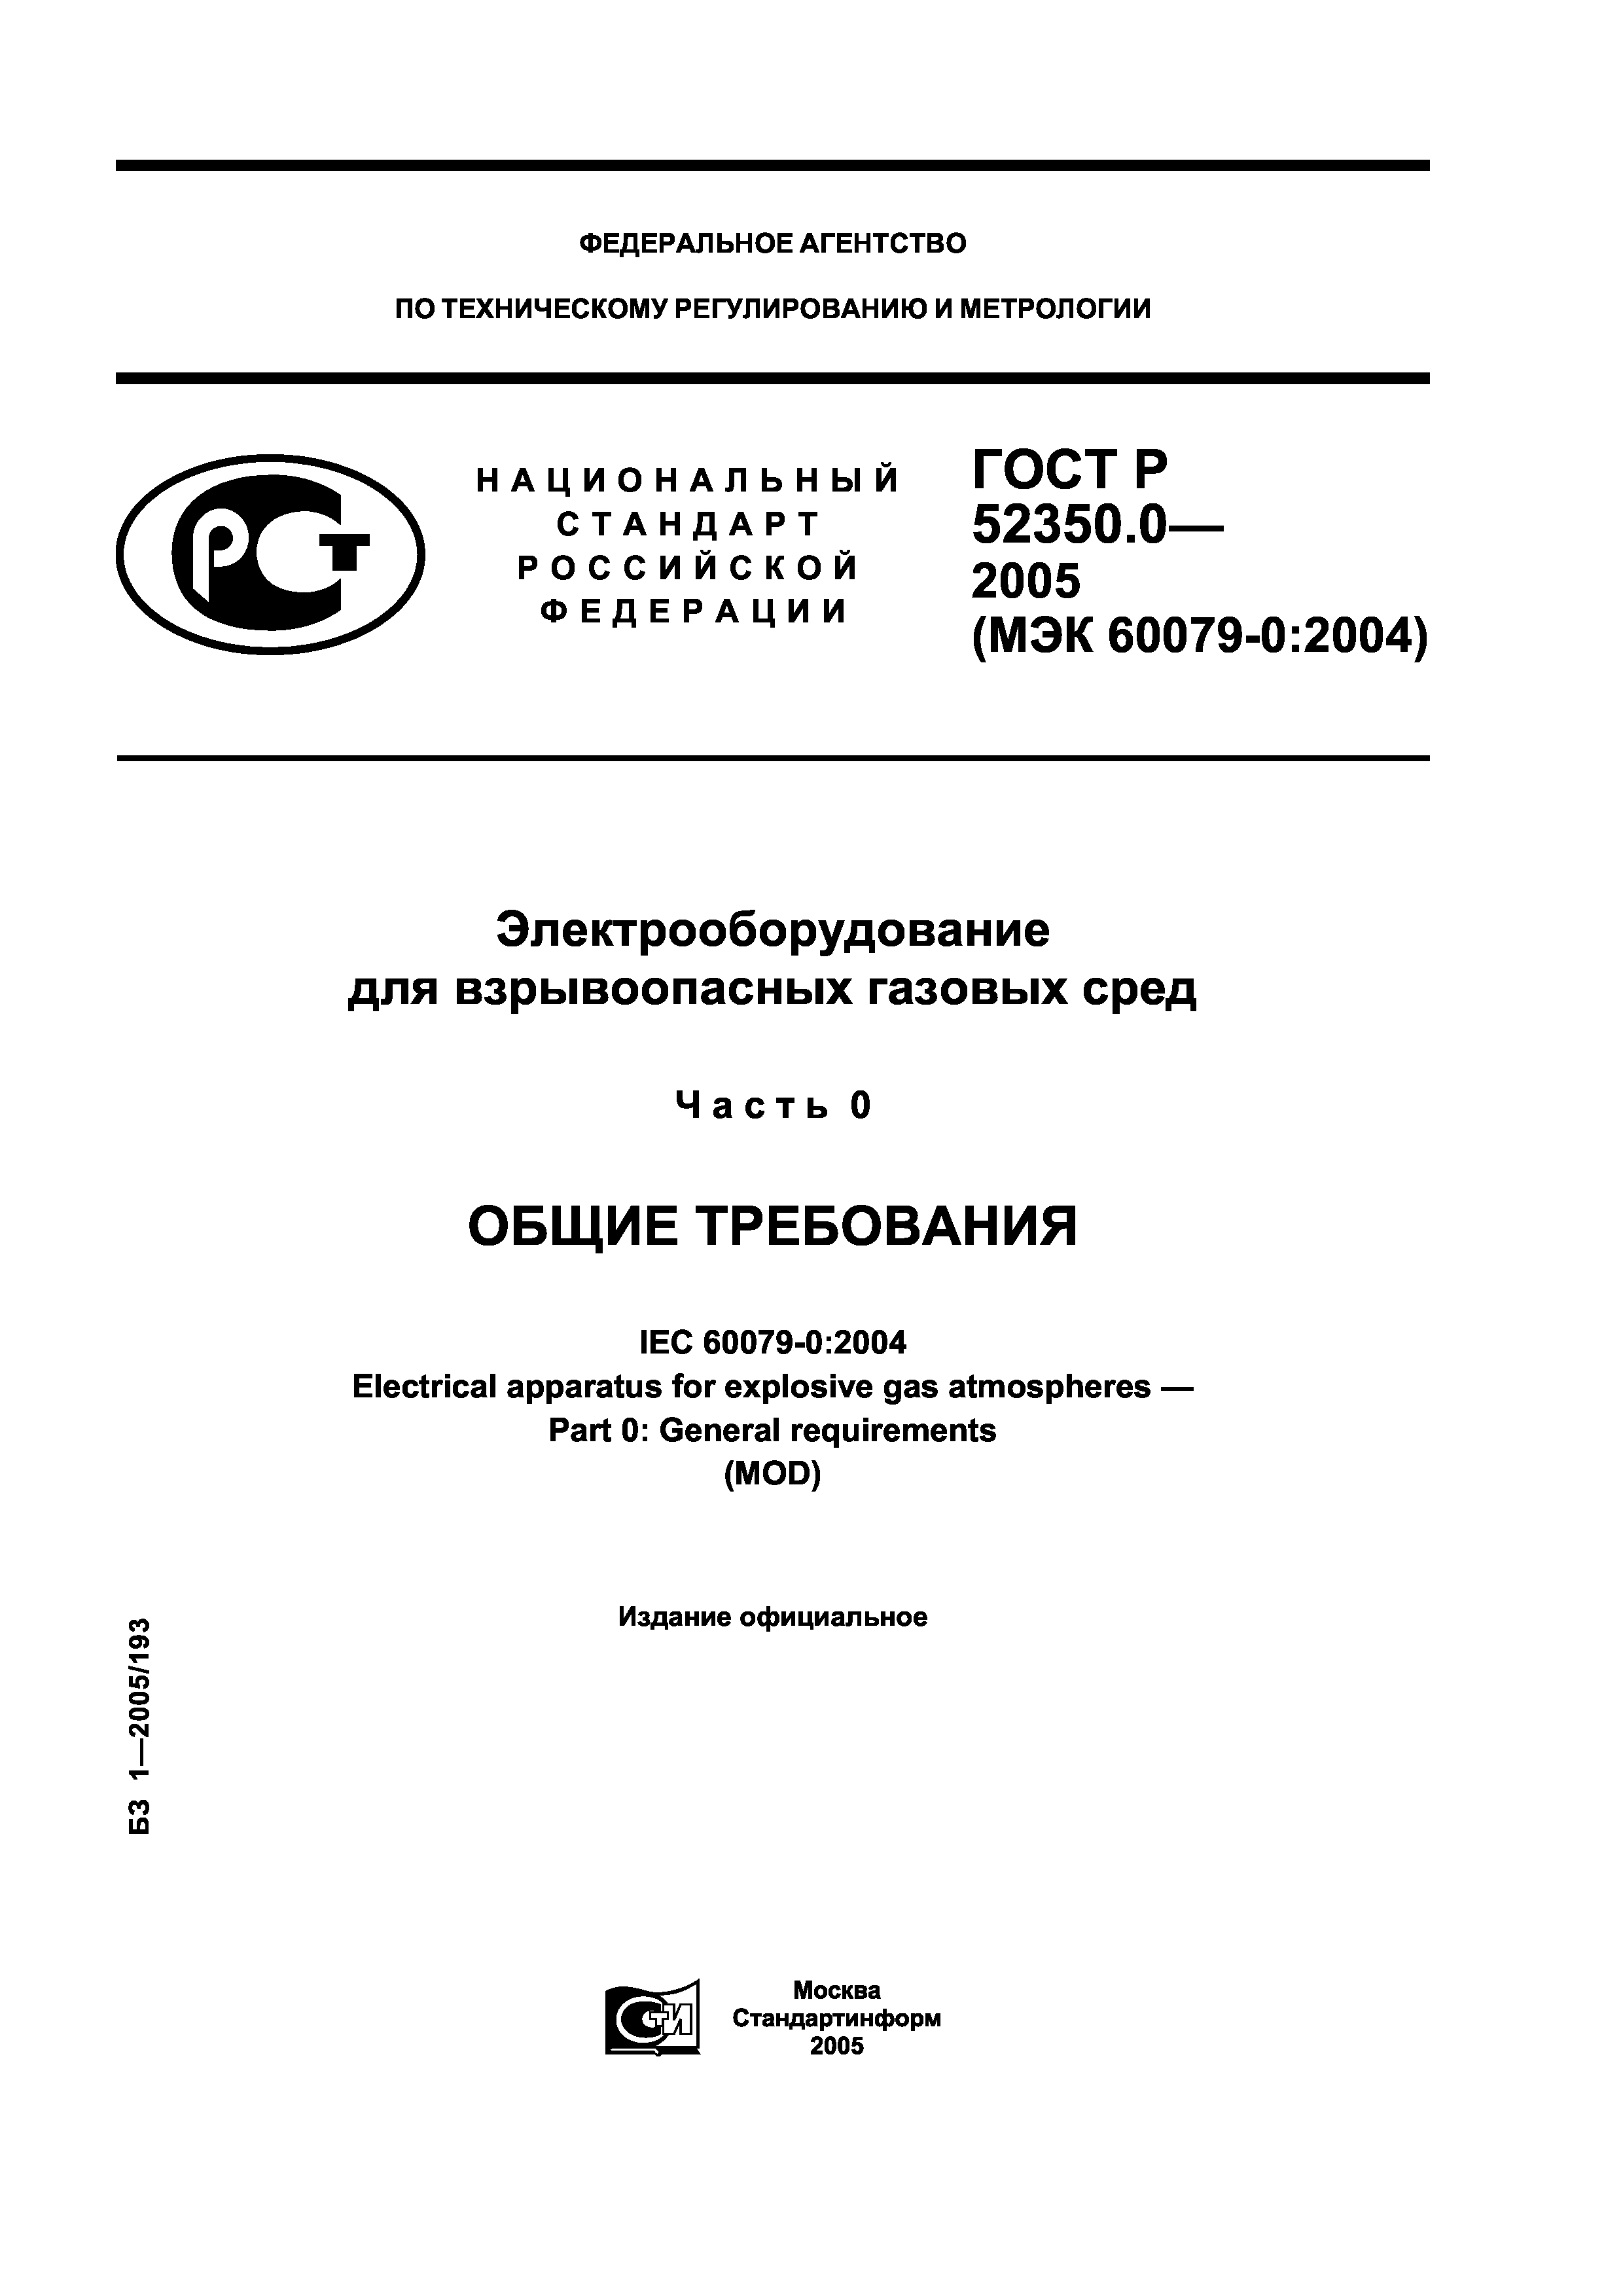 ГОСТ Р 52350.0-2005